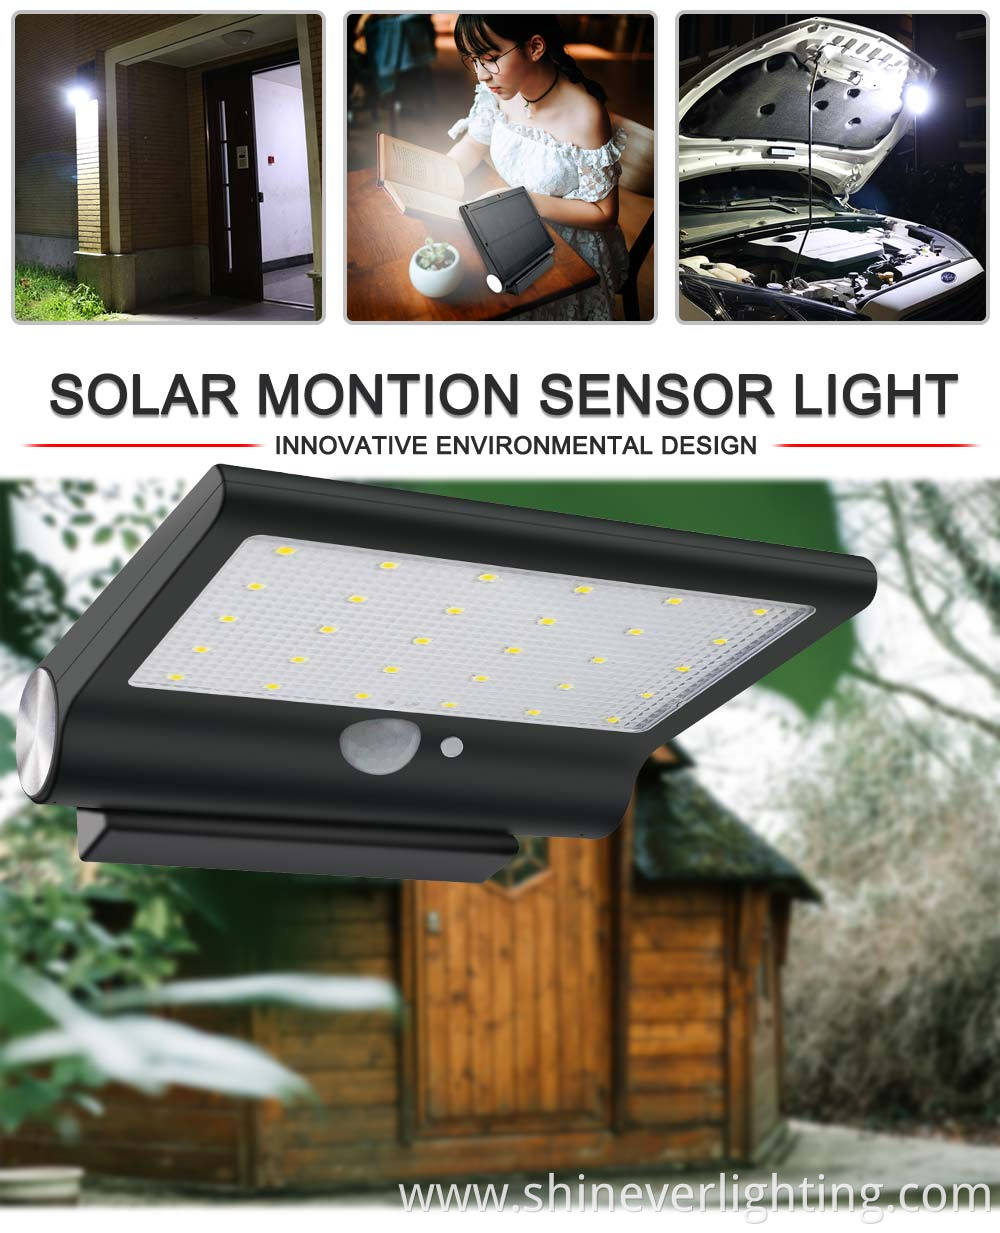 Solar-powered outdoor motion sensor light